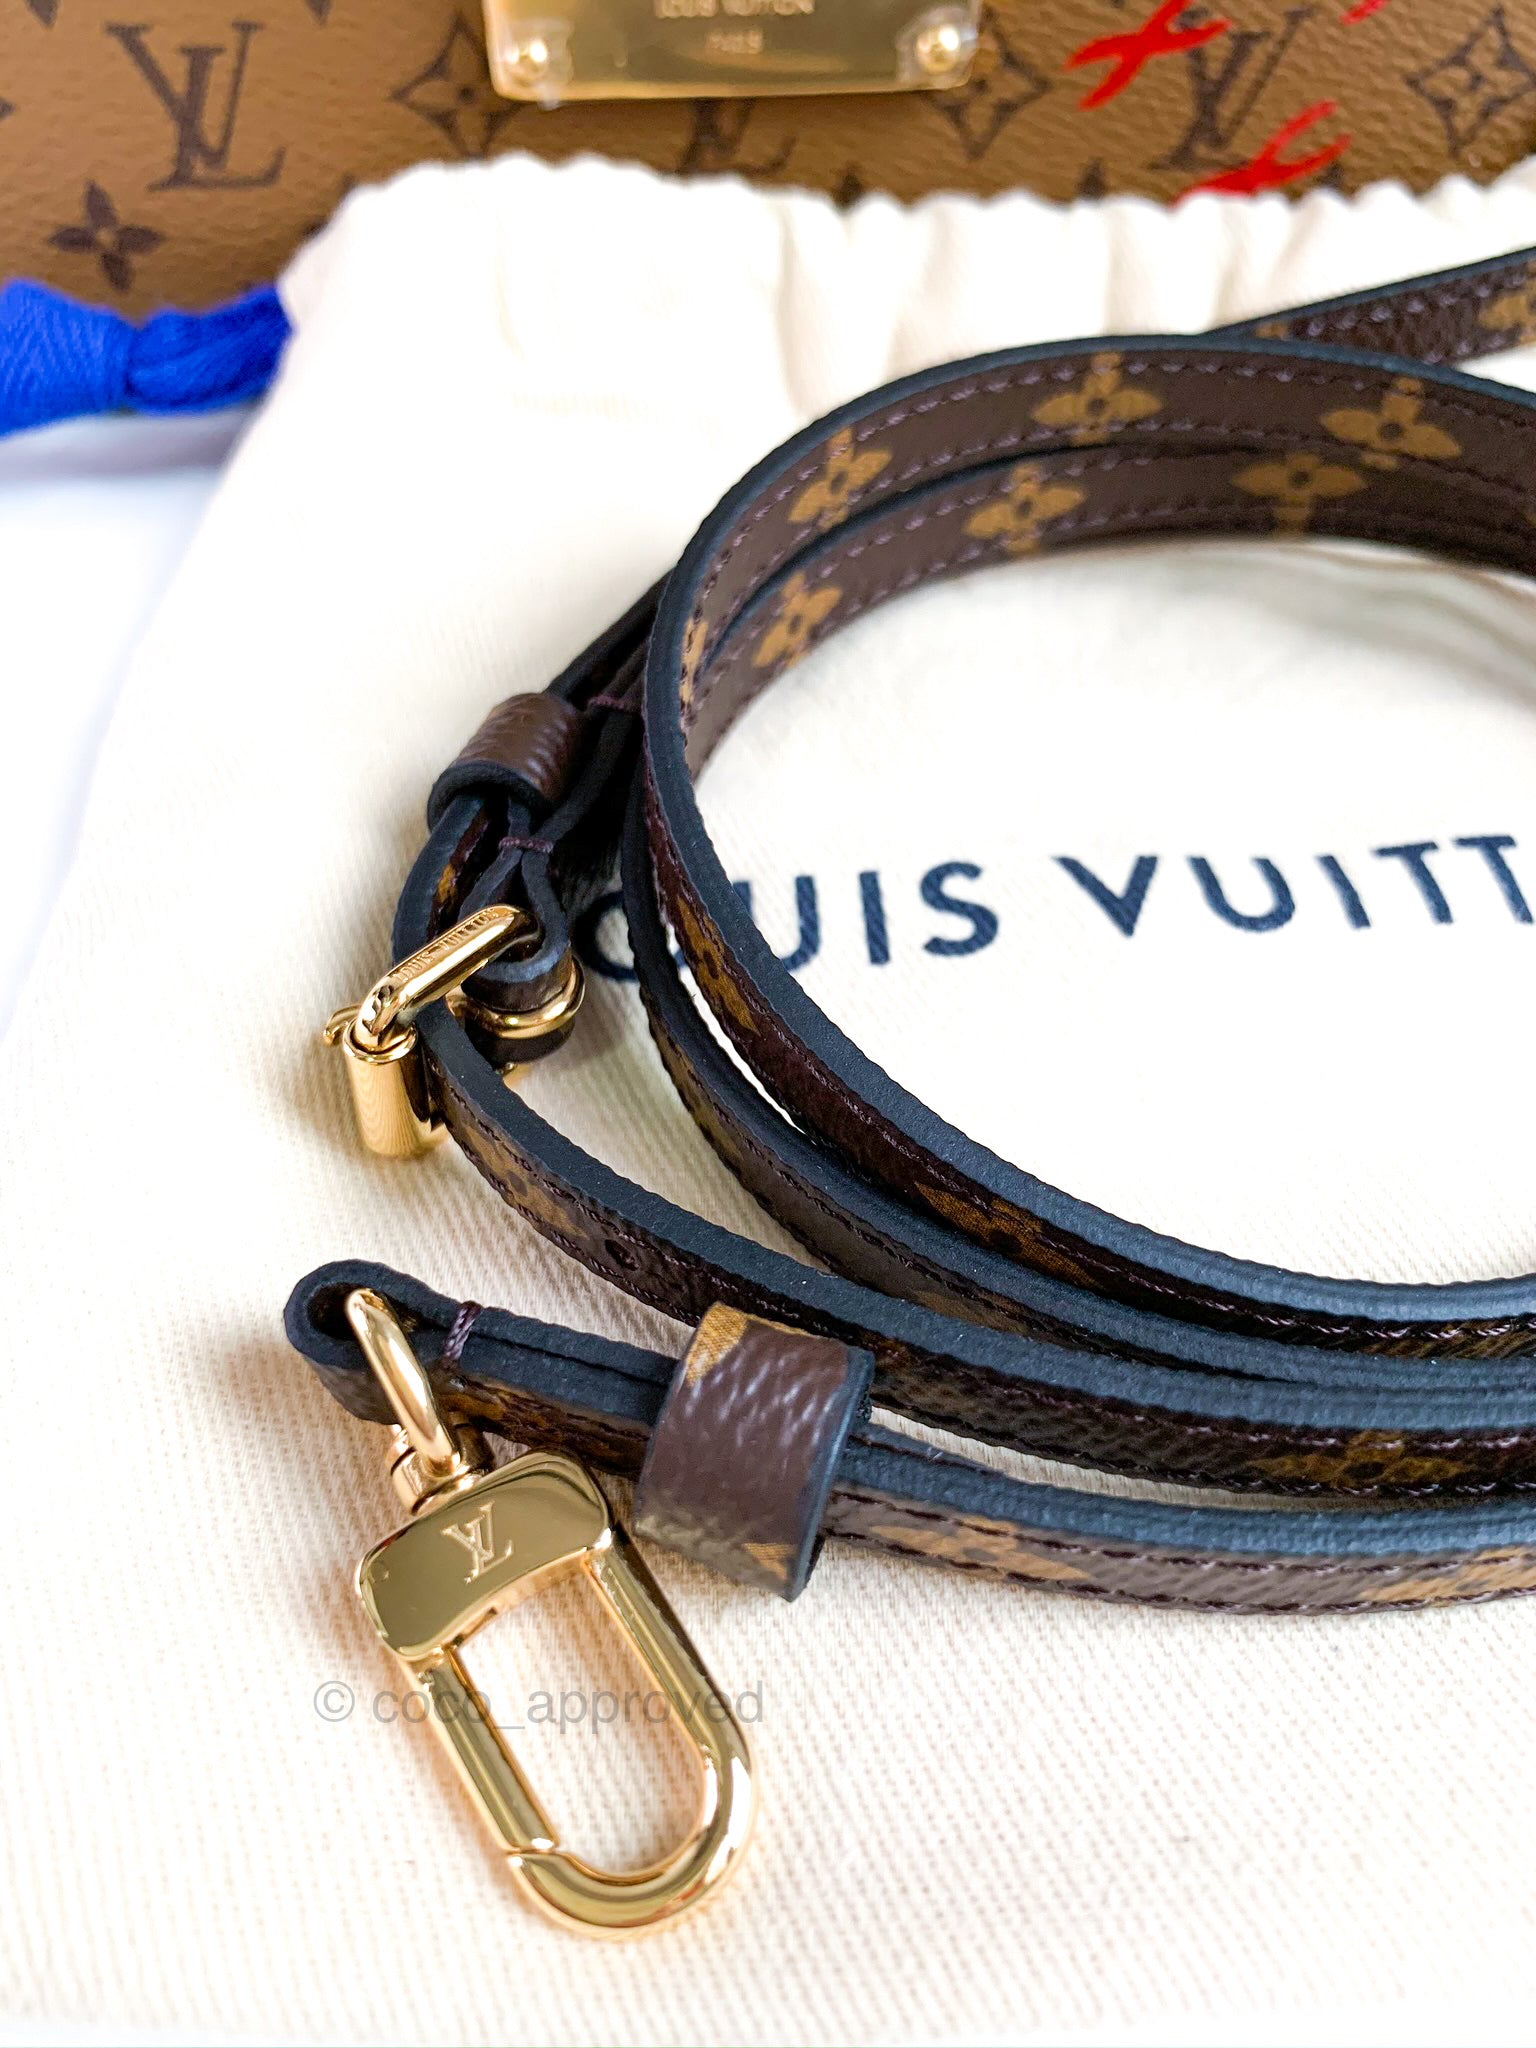 Louis Vuitton Monogram Adjustable Shoulder Bag Strap 16 mm